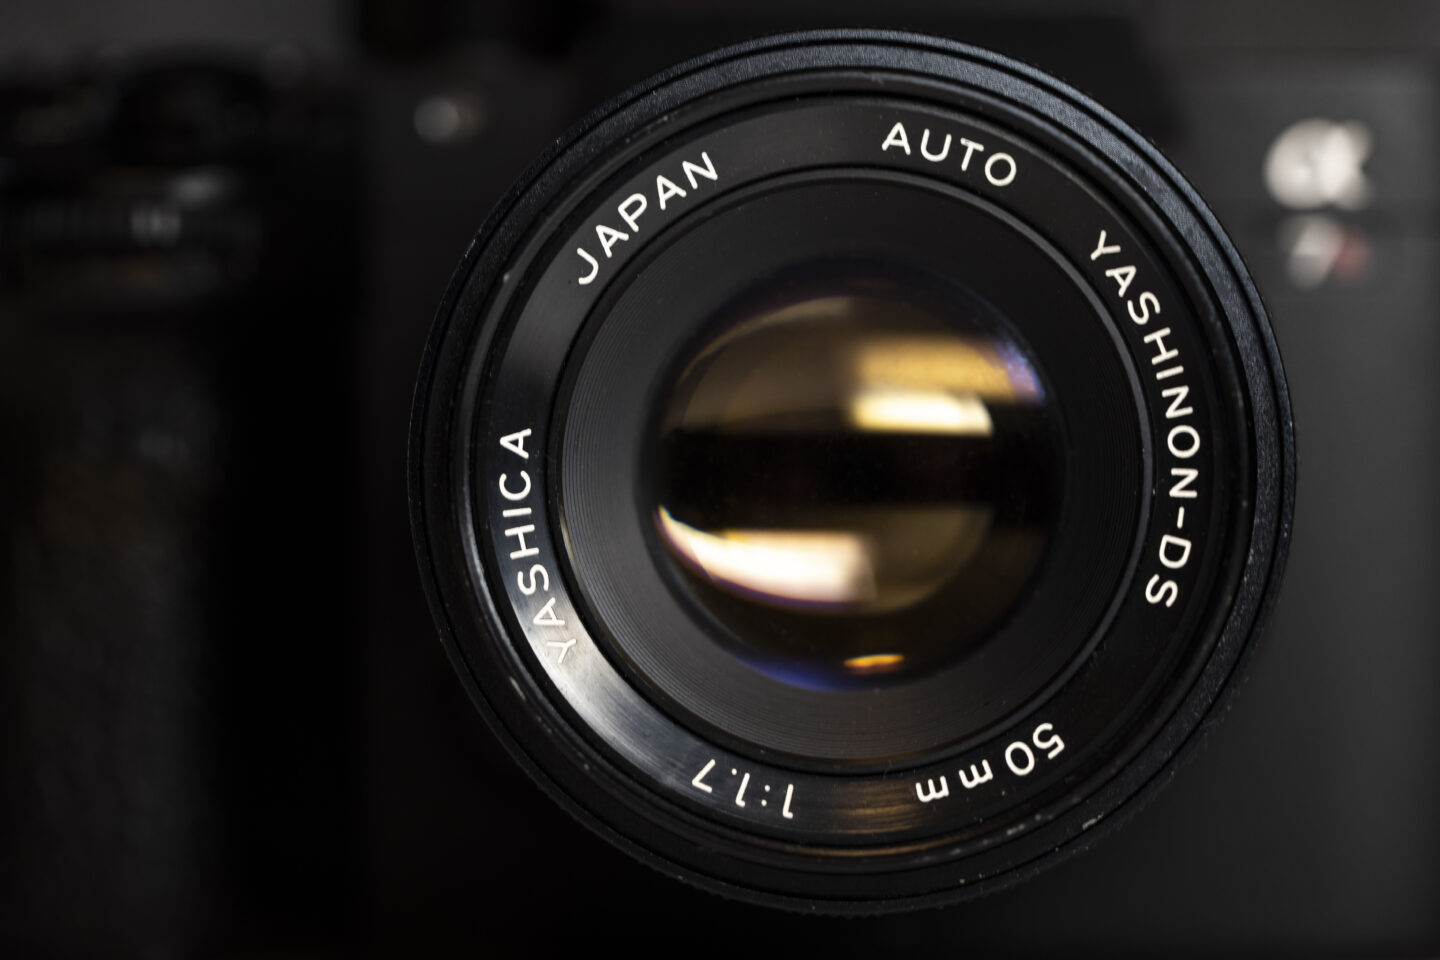 AUTO YASHINON-DX  50mm f1.7